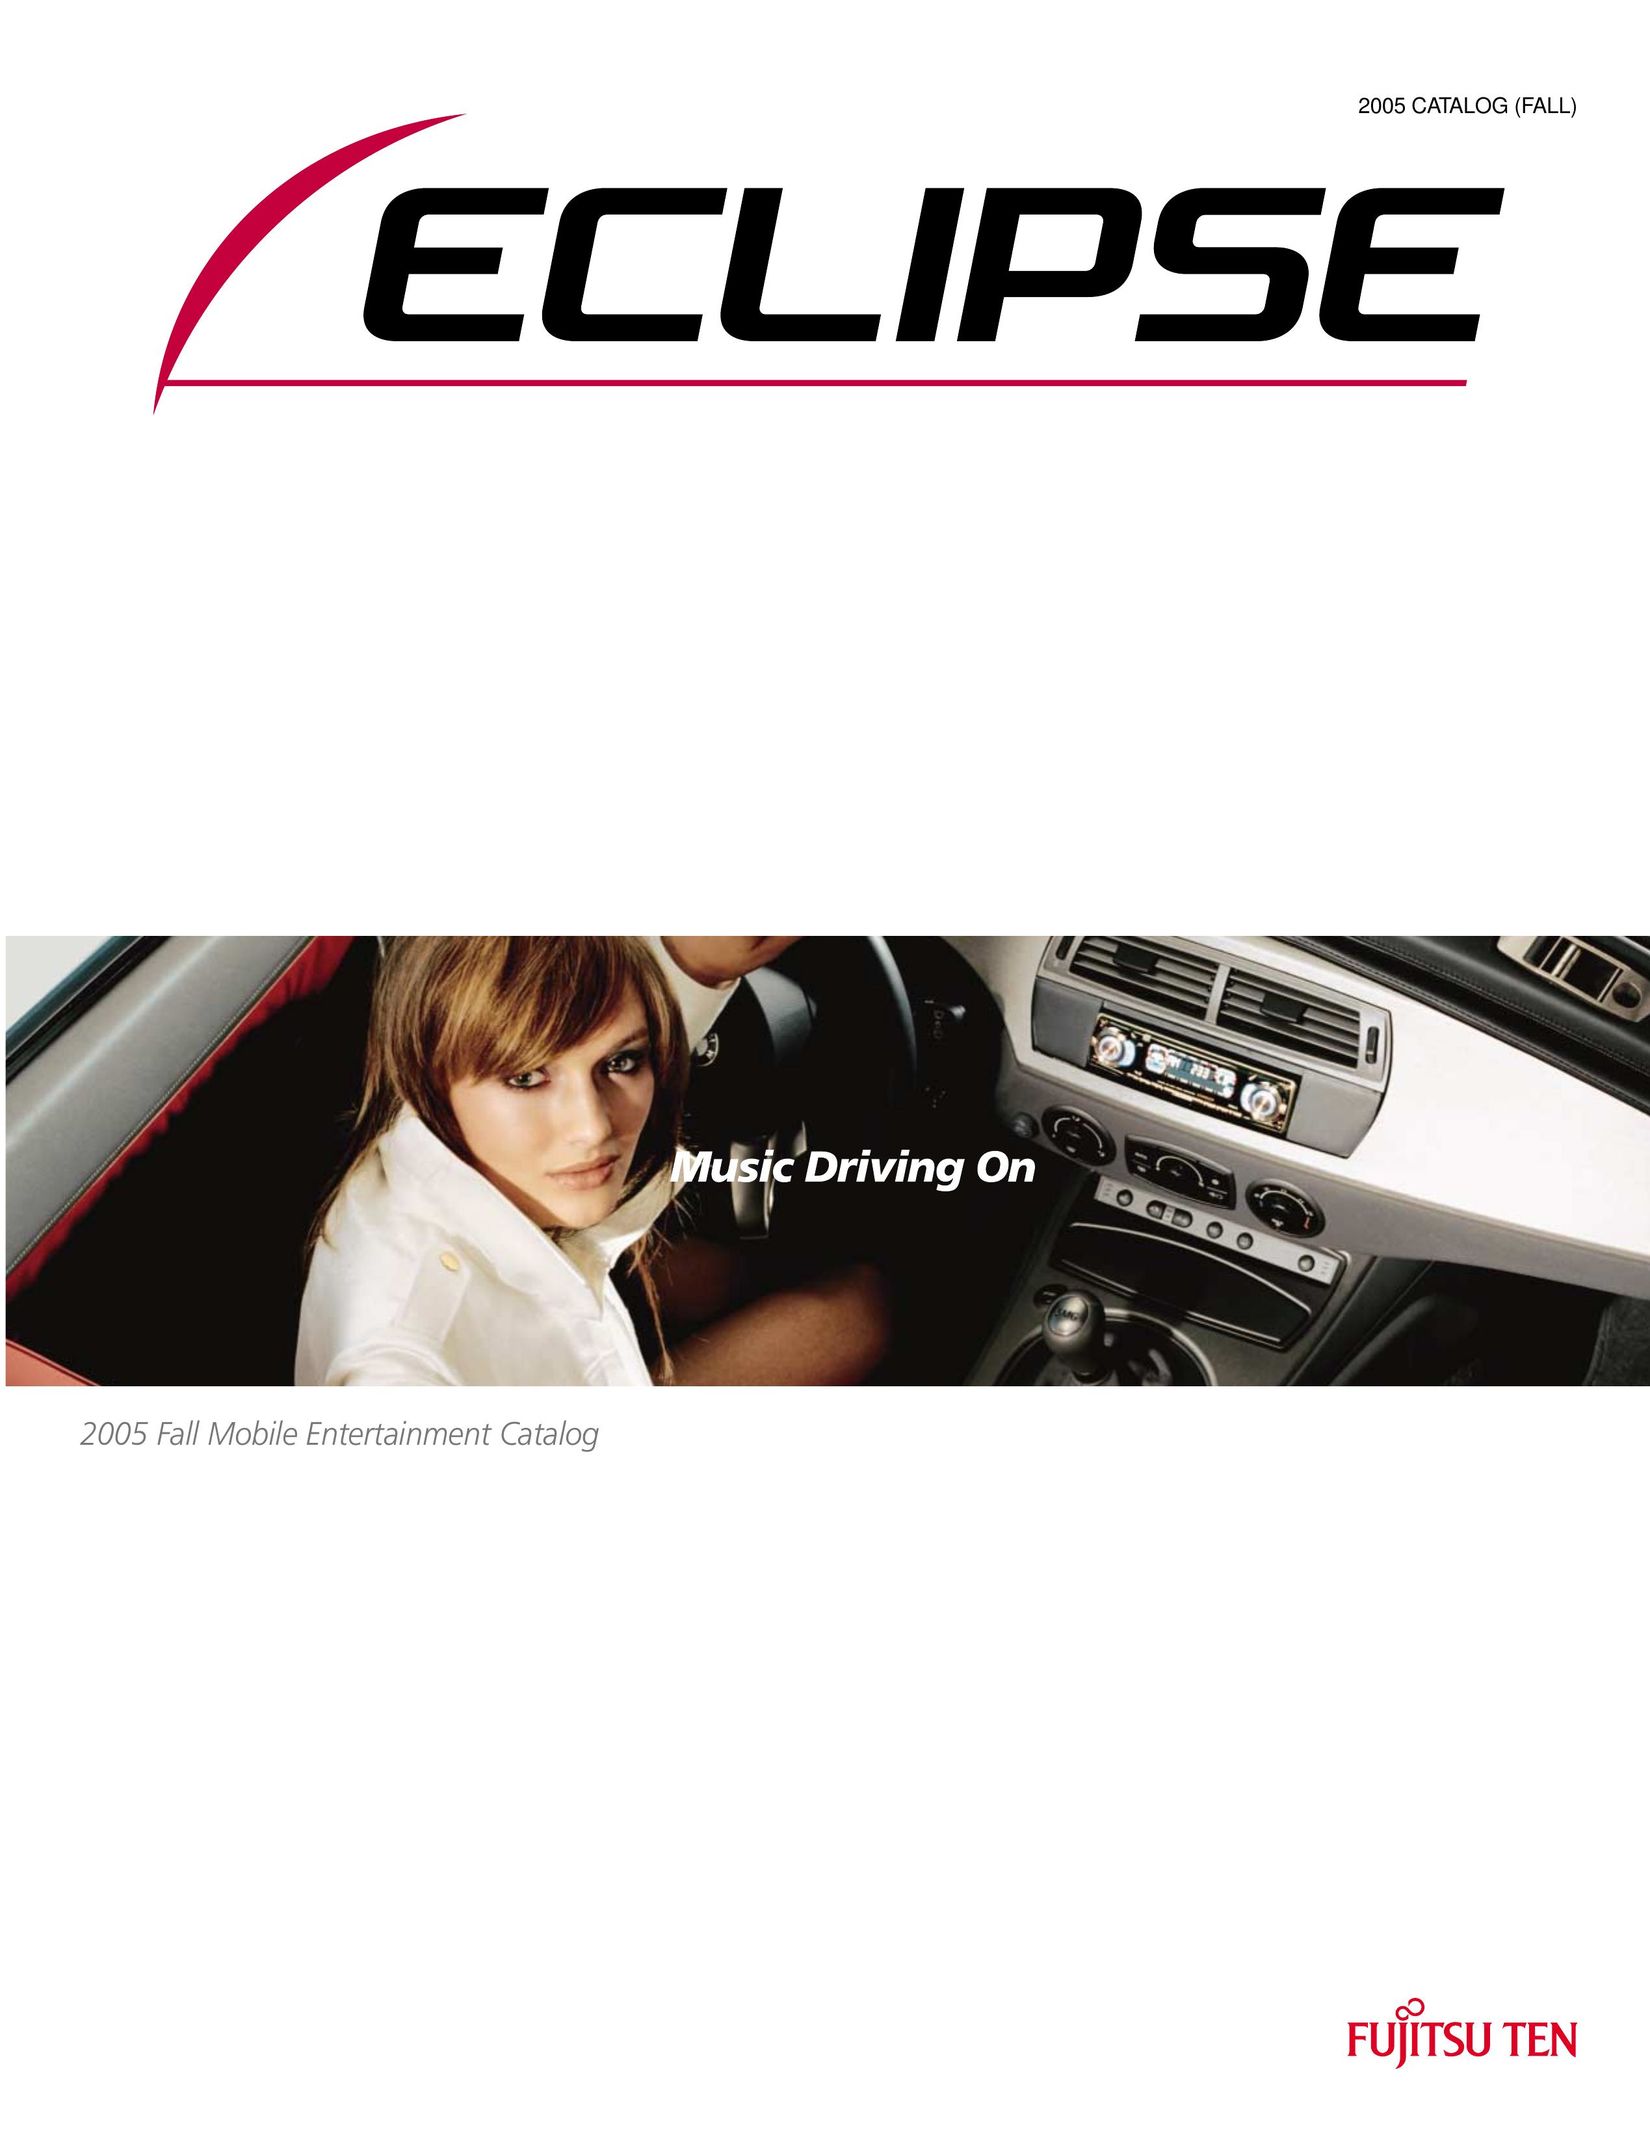 Eclipse - Fujitsu Ten AVX2494 MP3 Player User Manual